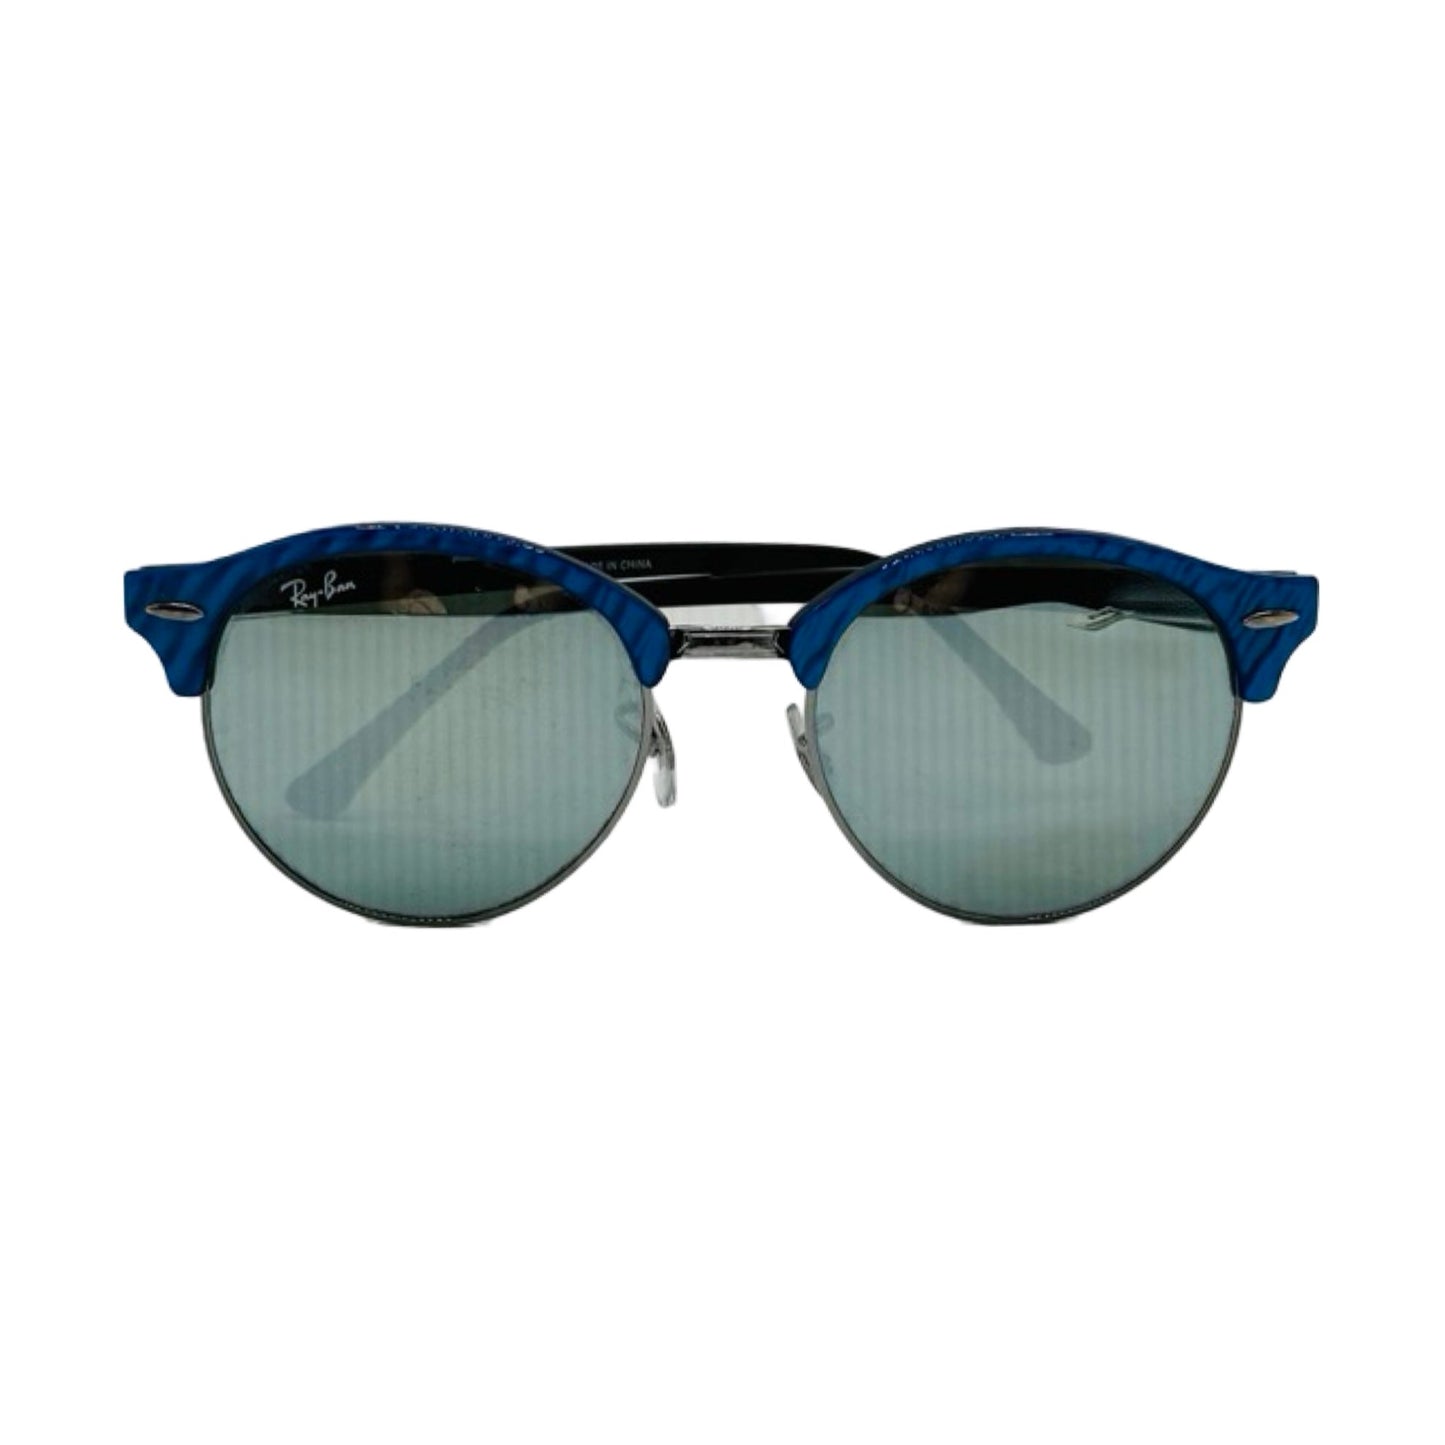 Blue Sunglasses Designer Ray Ban